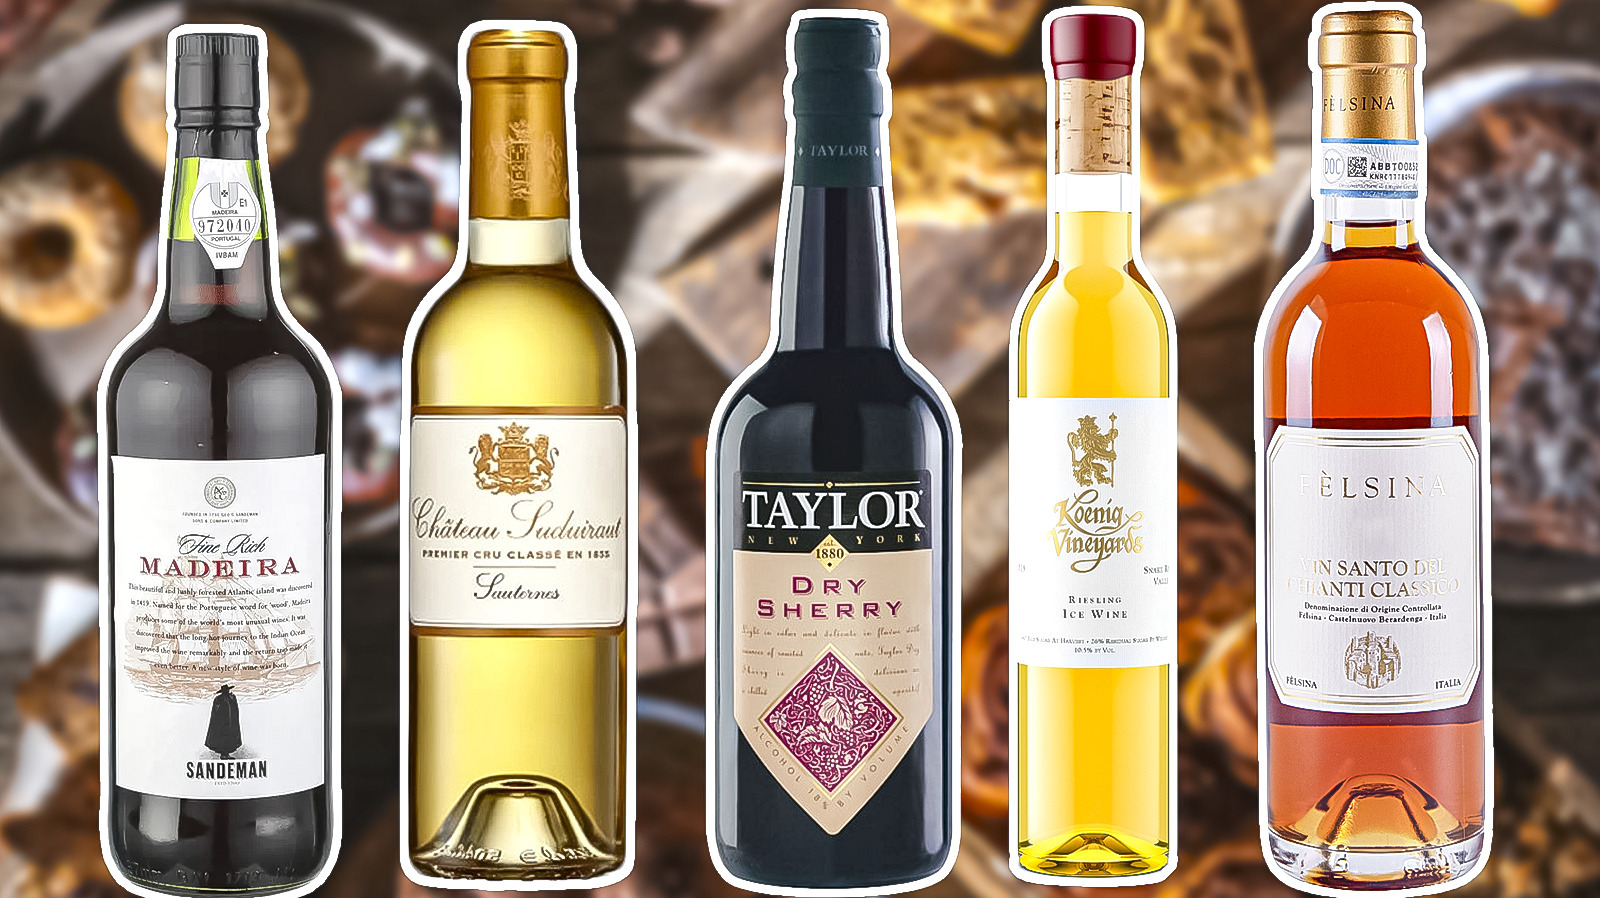 Sauternes Glass: The Best Glass for Sauternes Dessert Wine